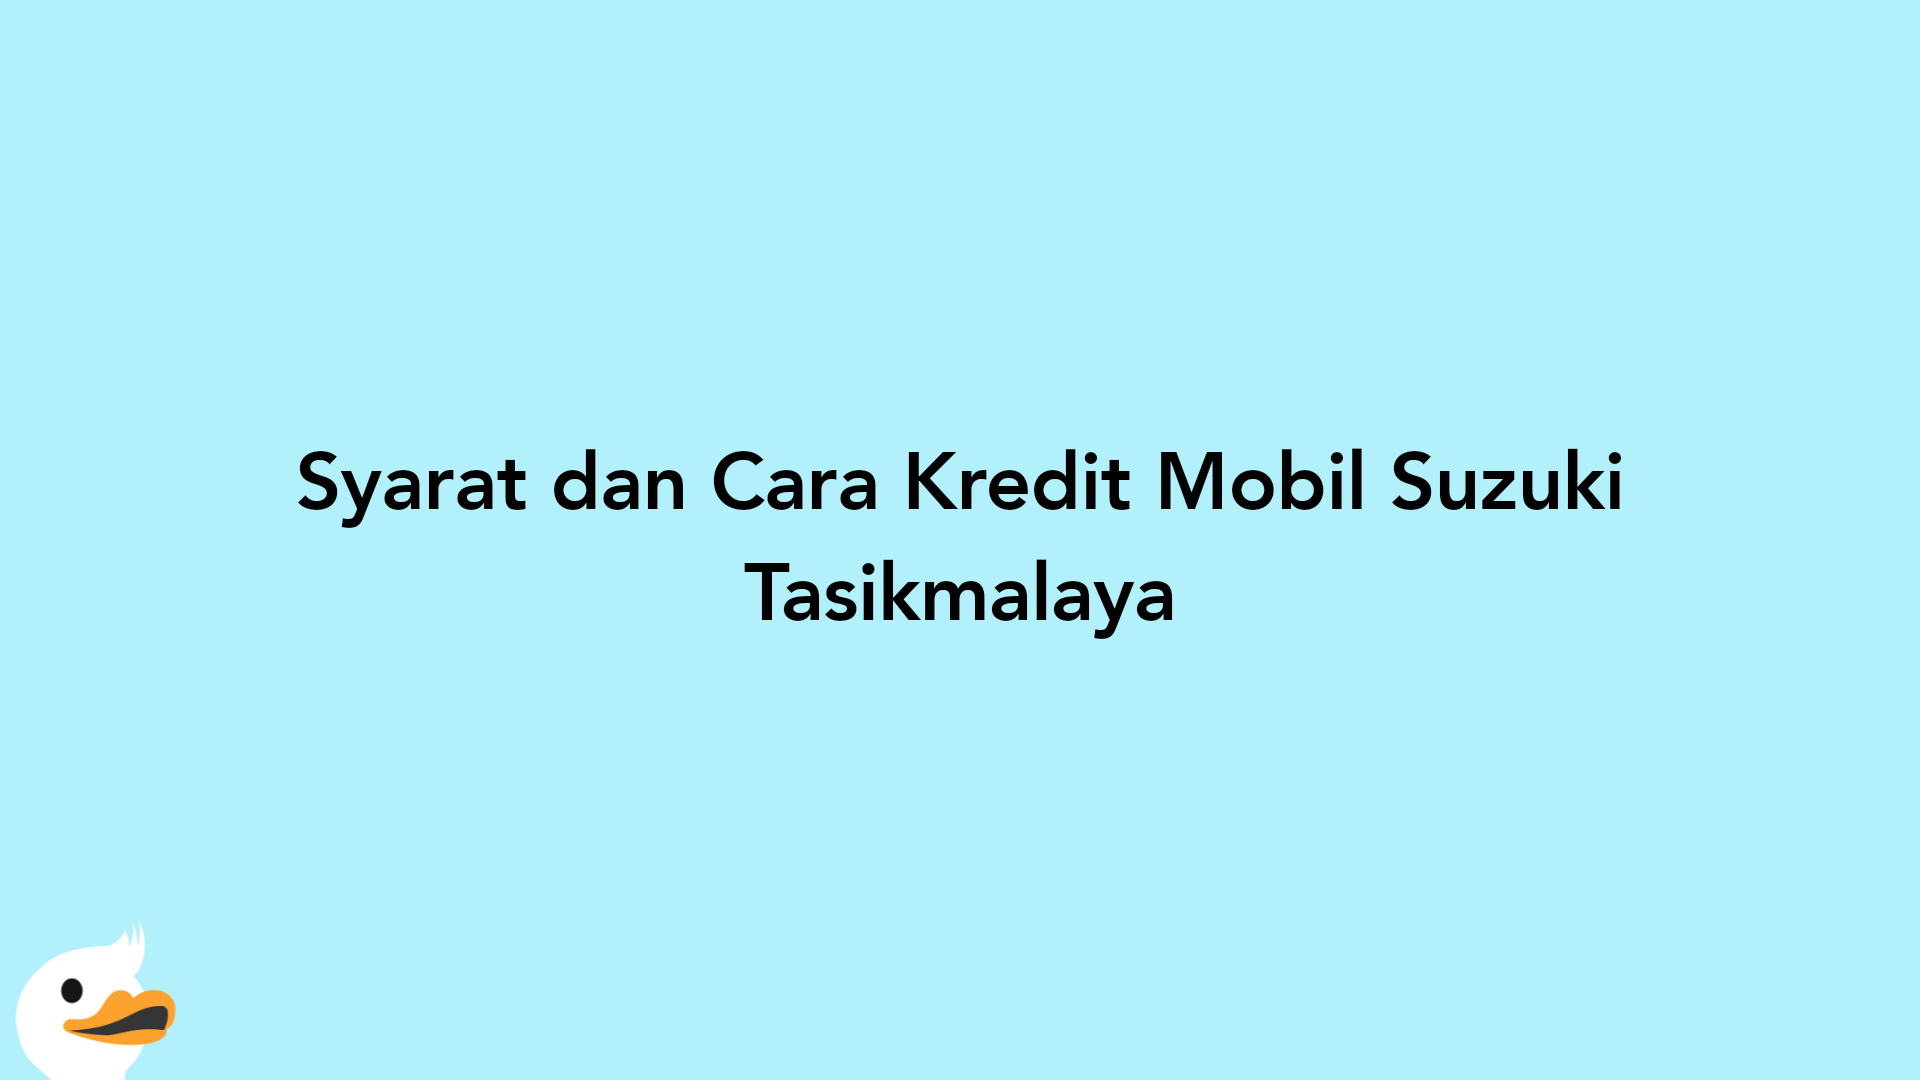 Syarat dan Cara Kredit Mobil Suzuki Tasikmalaya